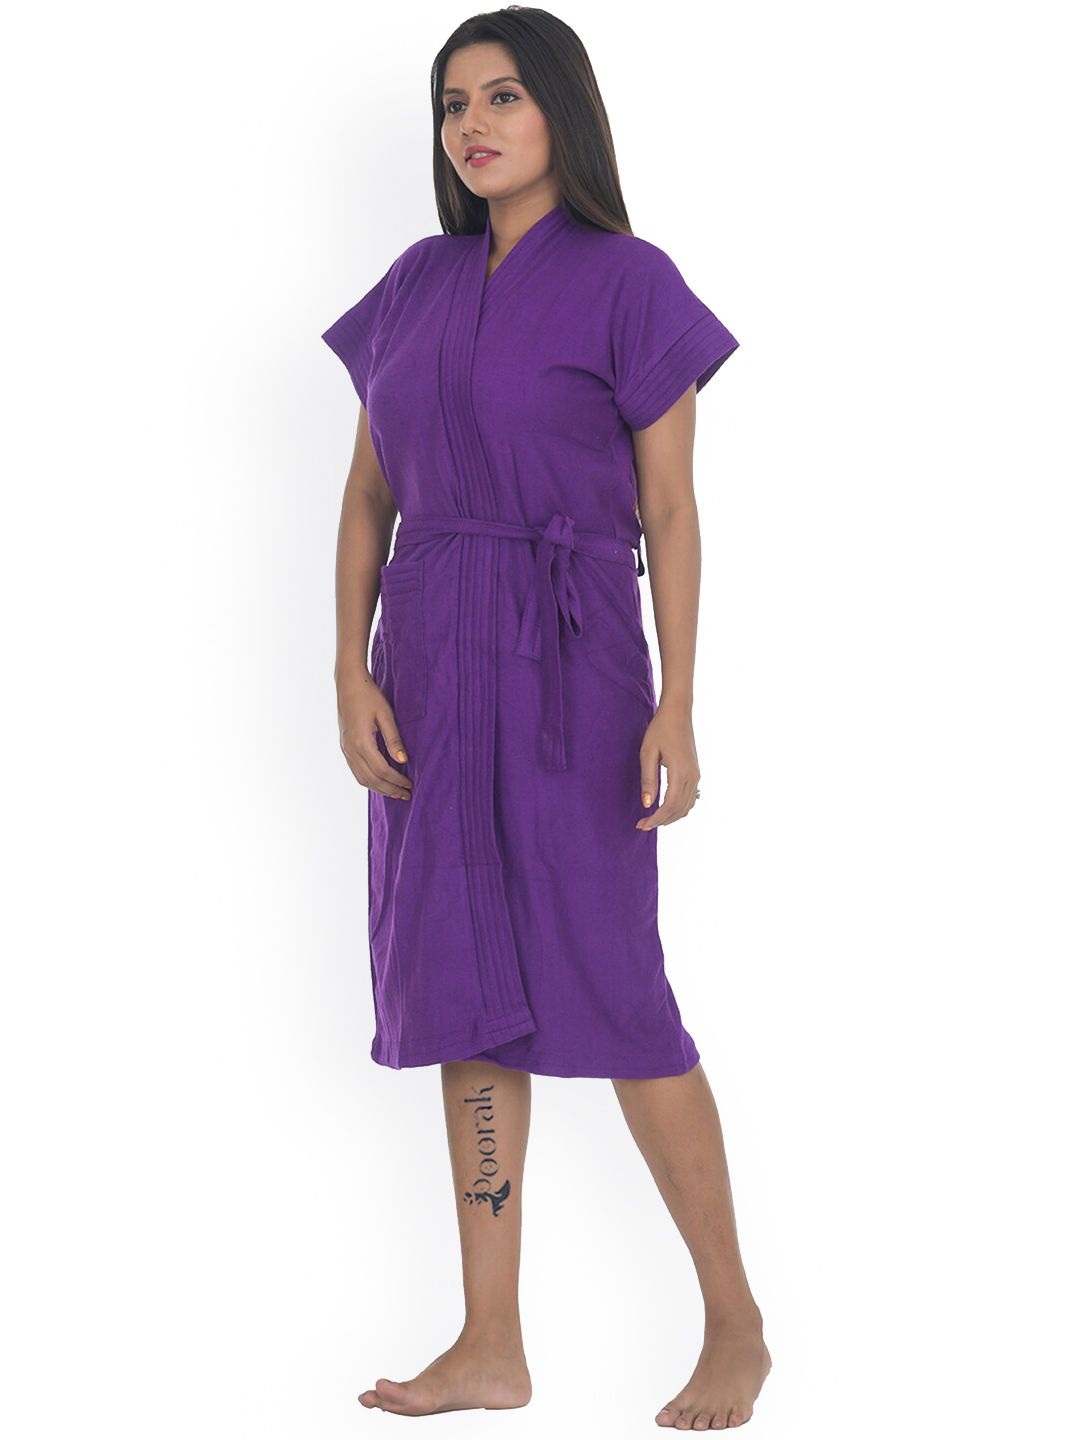 POORAK Women Purple Solid Cotton Bath Robe Price in India